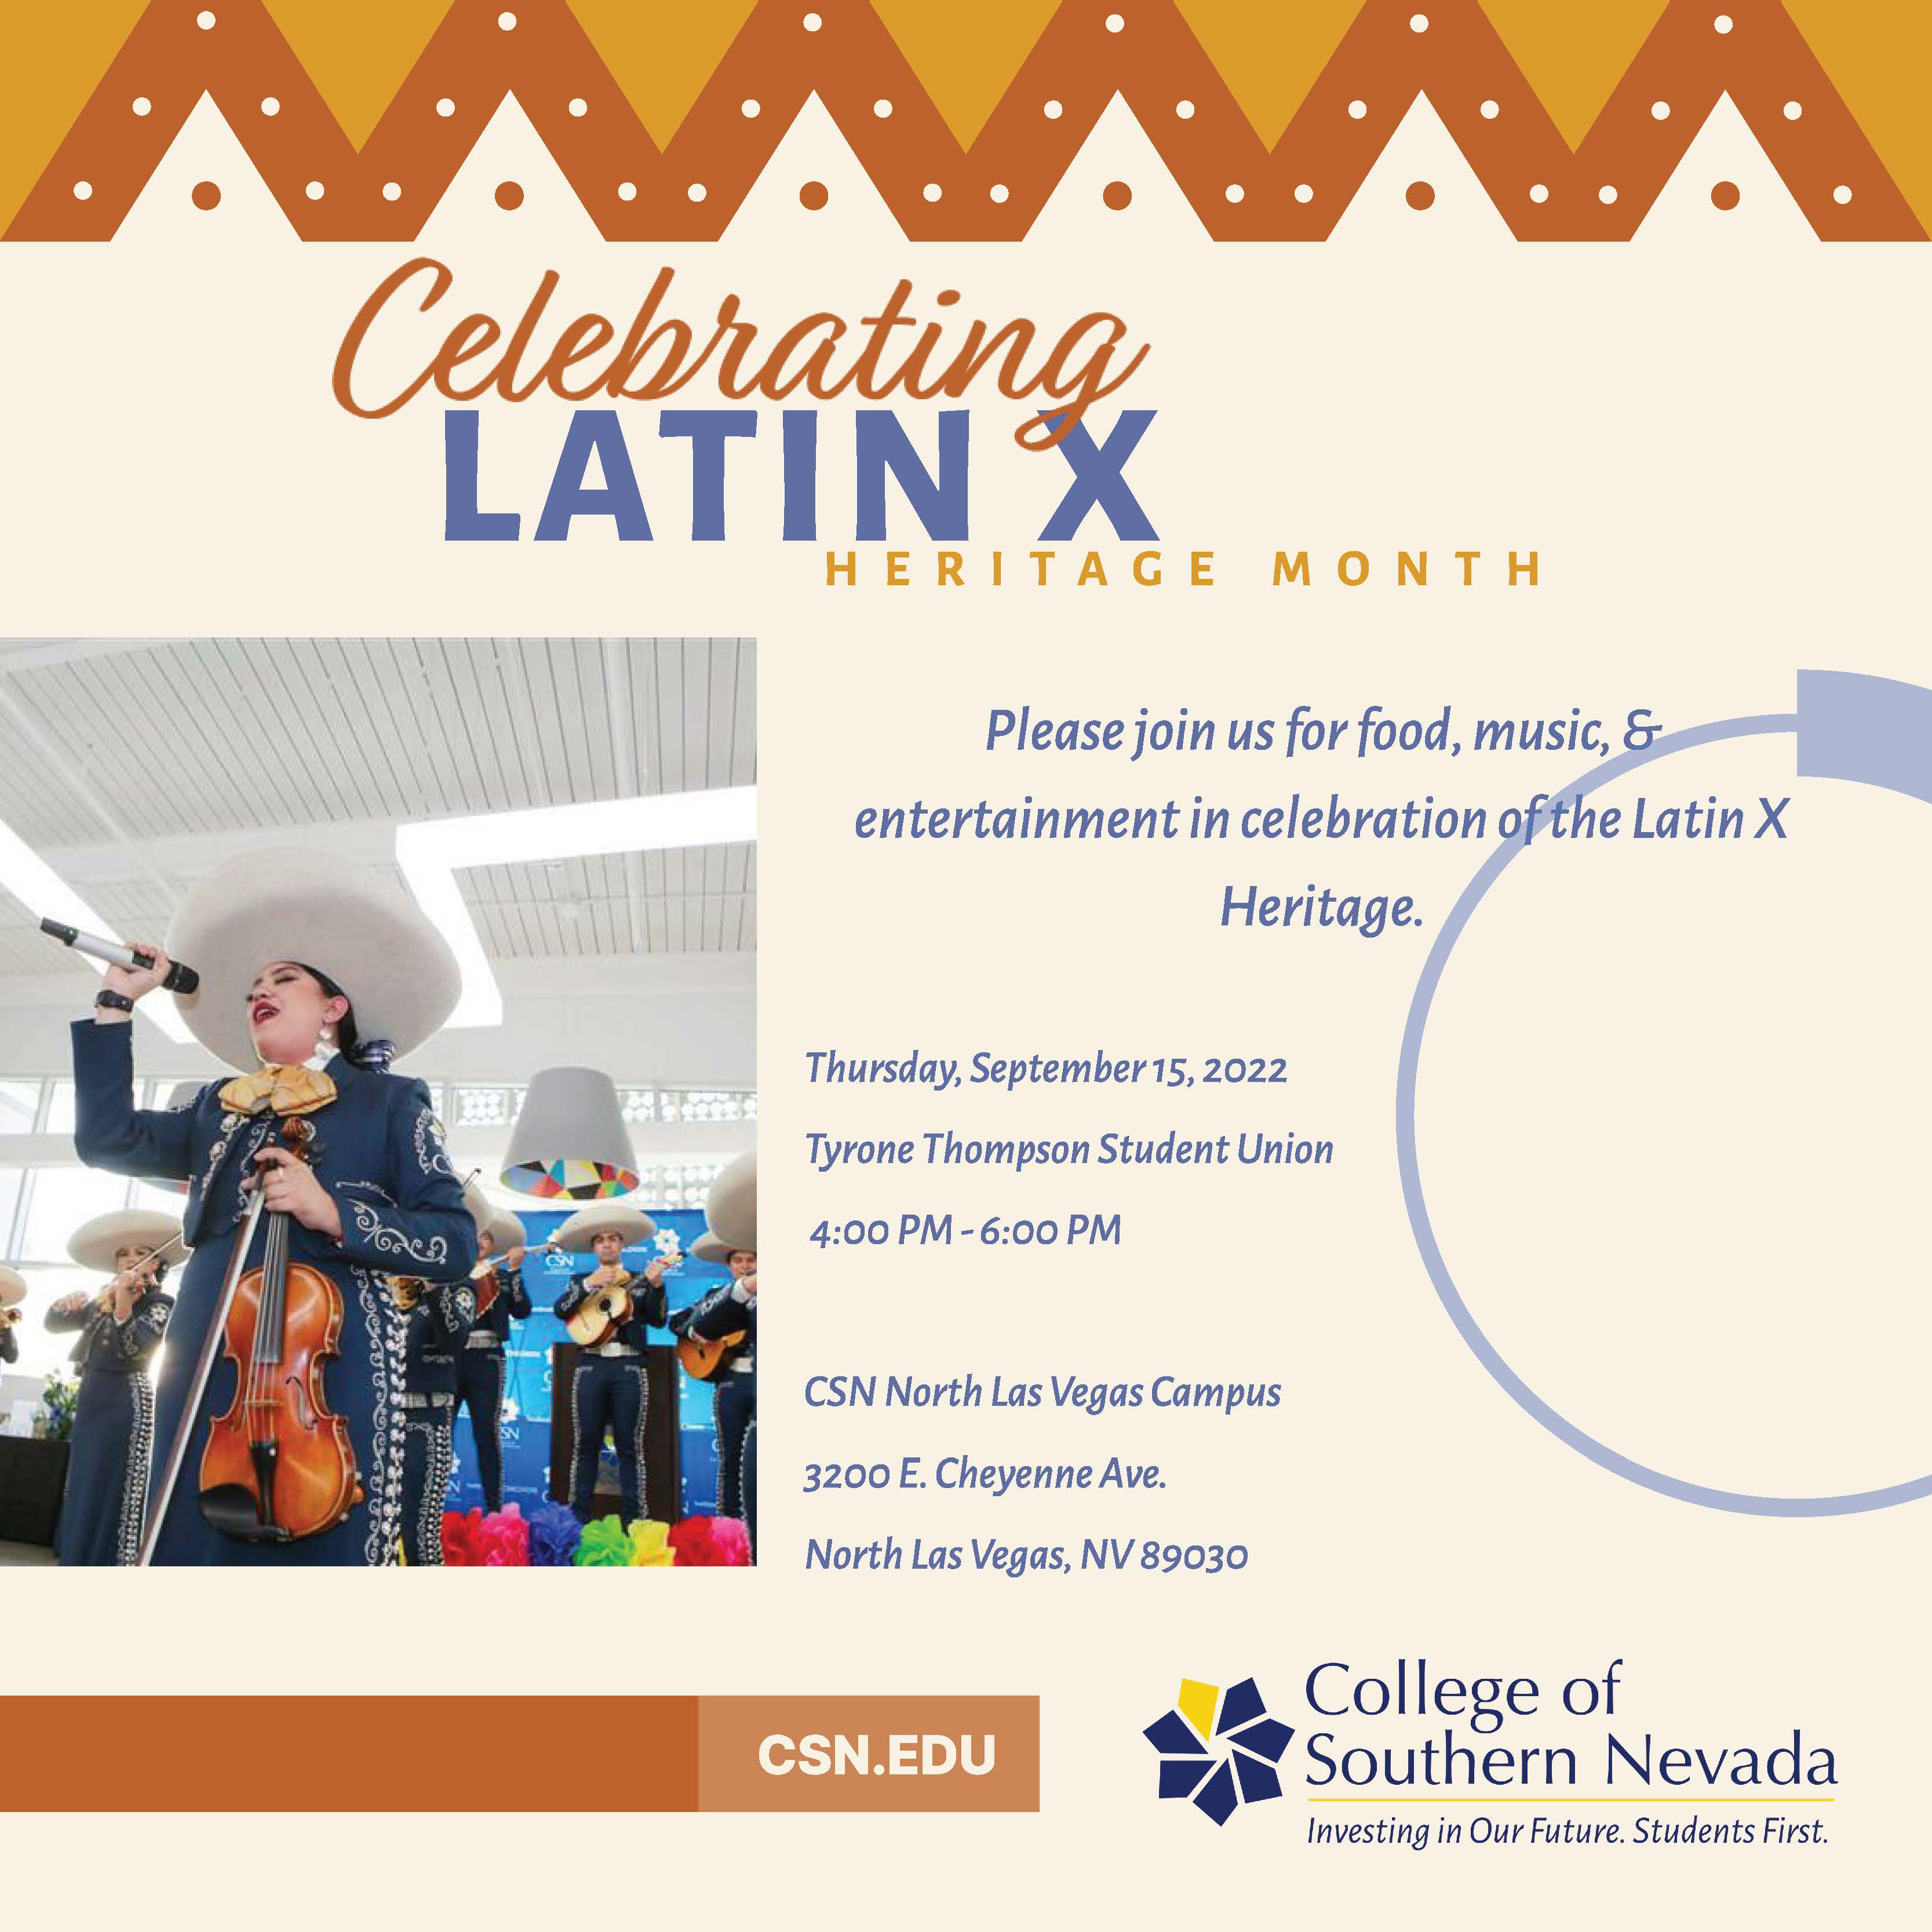 Latin X Heritage kick off event flyer September 15, 2022